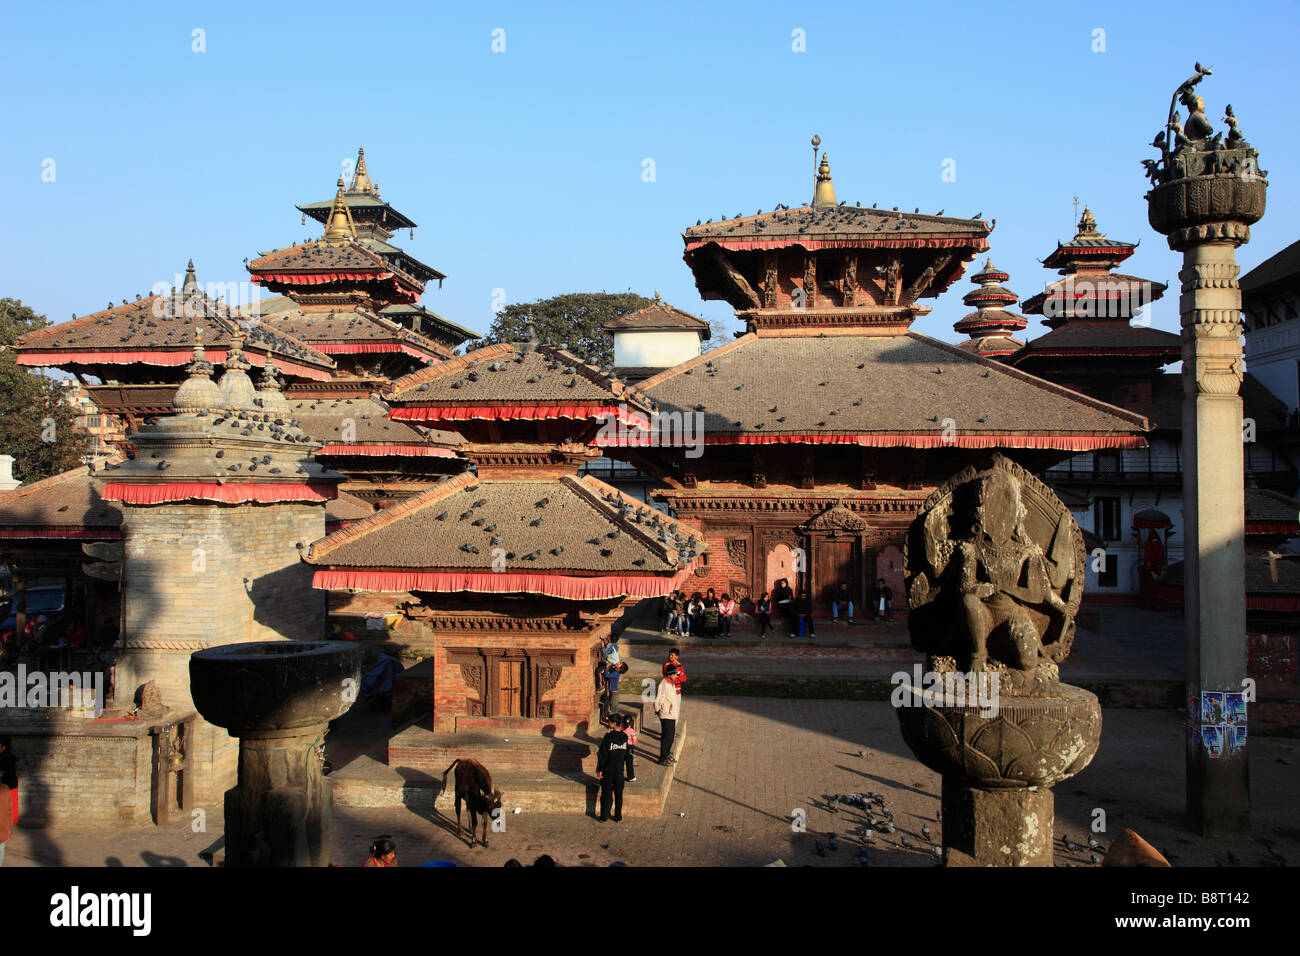 Nepal Kathmandu Durbar Square temples general view Stock Photo